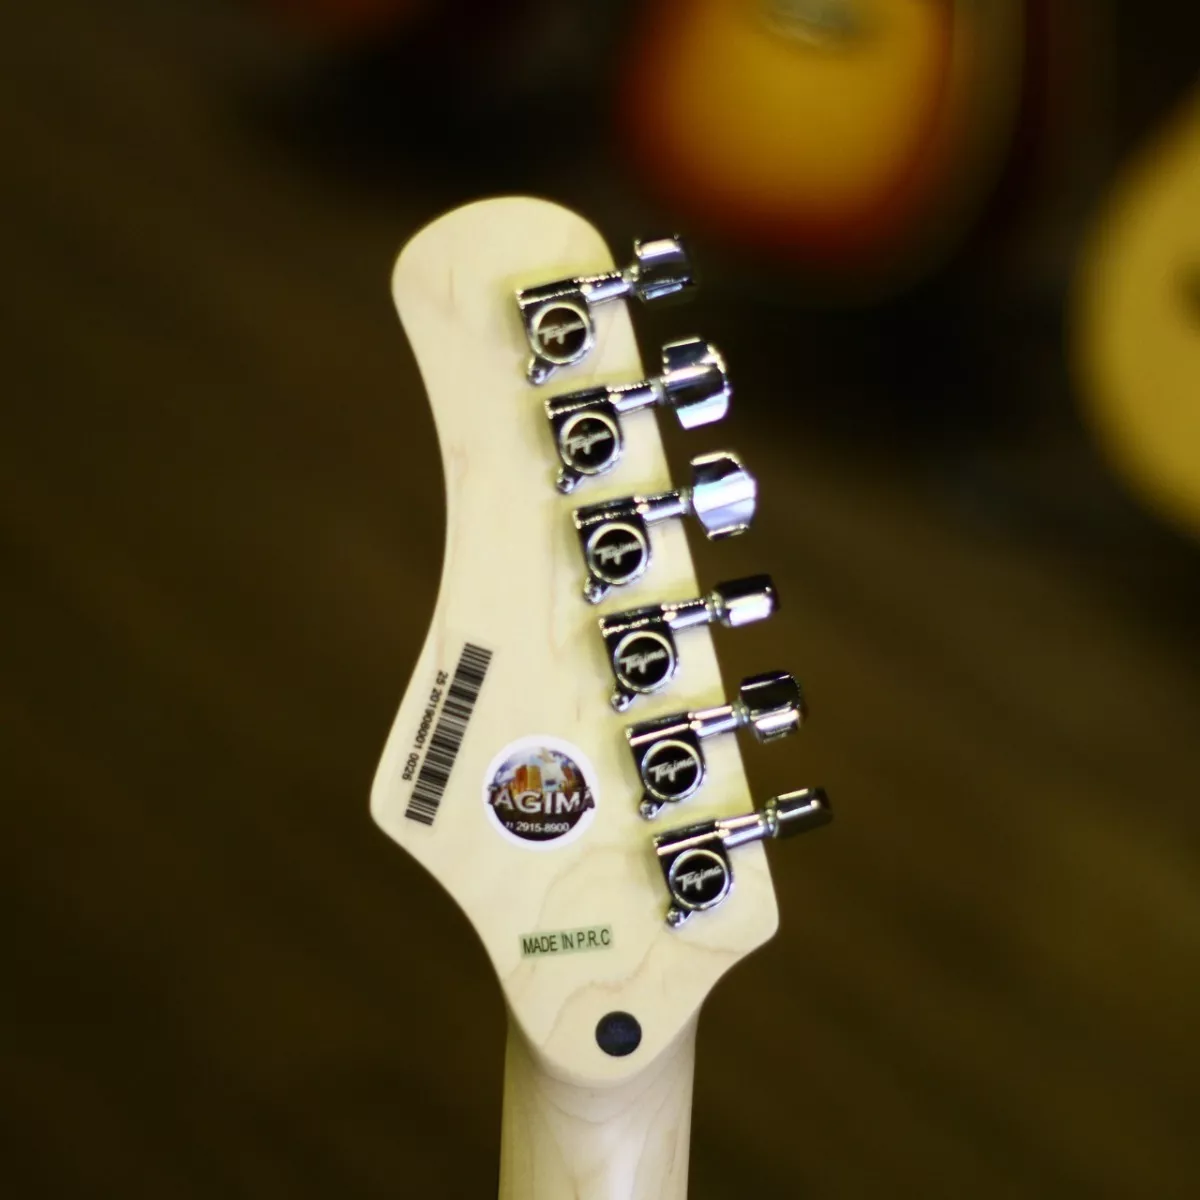 Resultado de imagem para Guitarra Eletrica Tagima Tg520 Mgy Metallic Gold Yellow